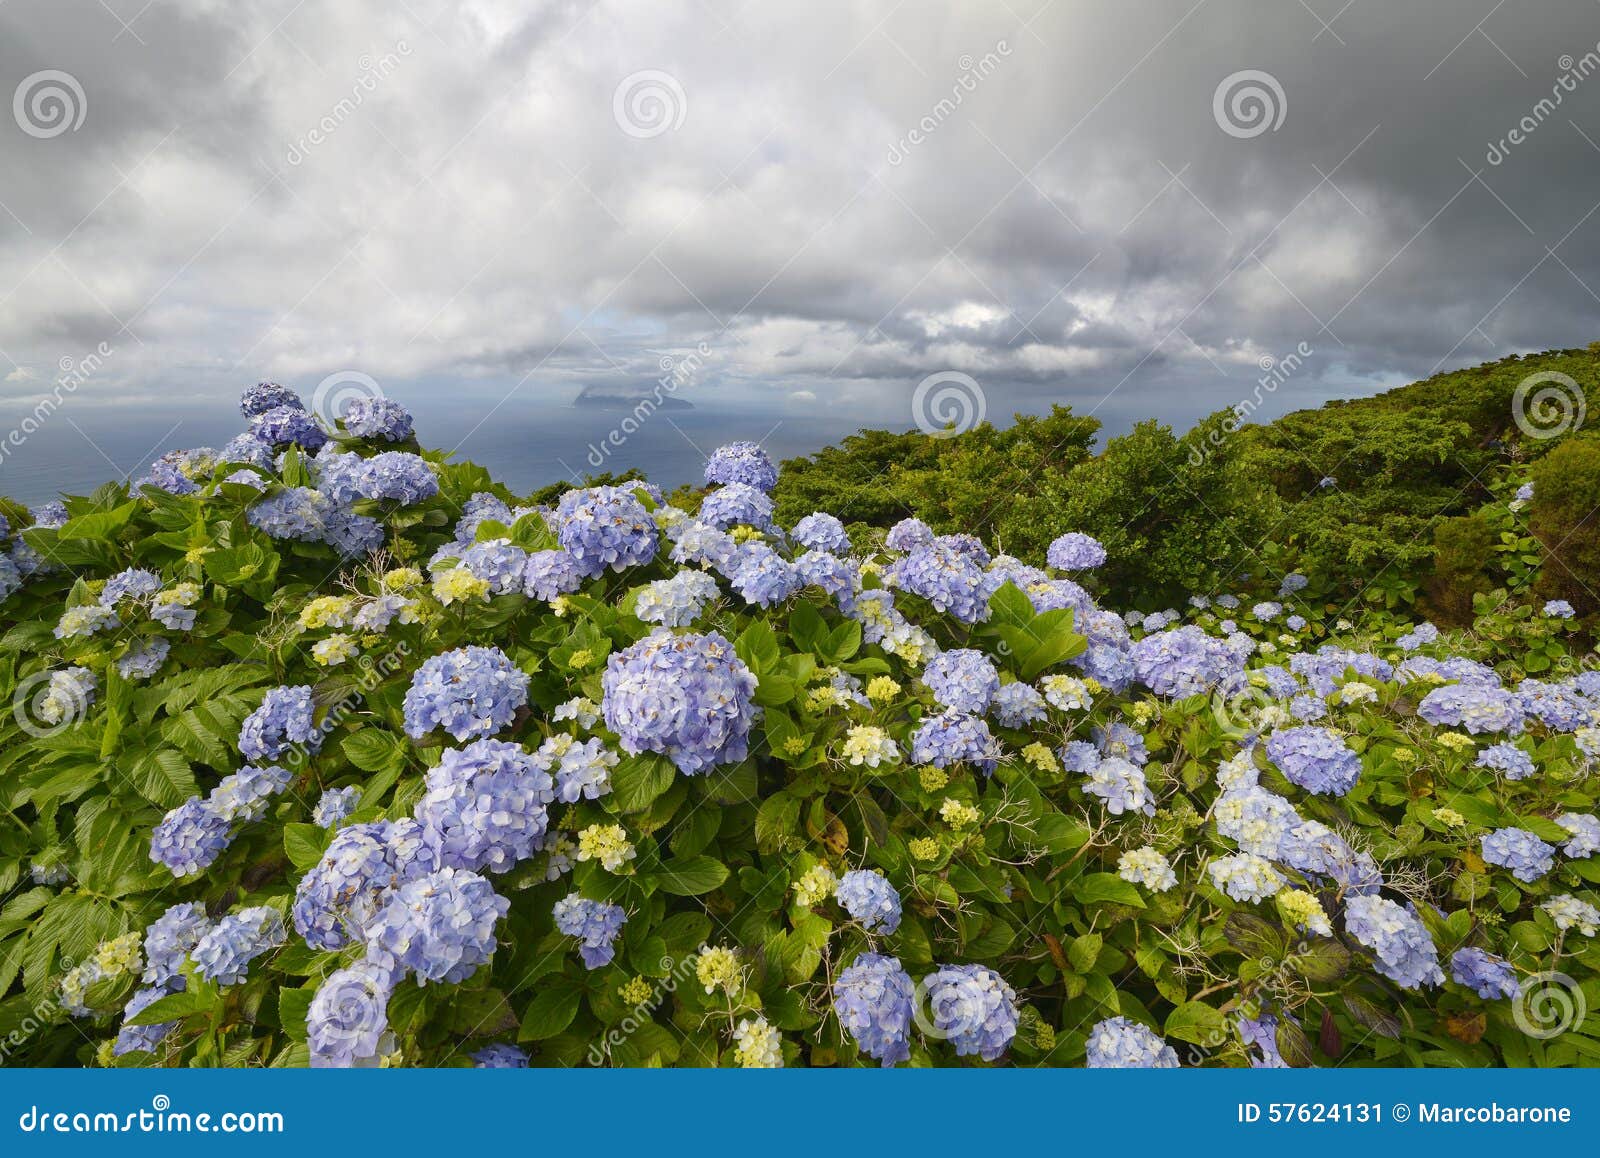 hydrangea macrophylla, flores island, azores, portugal